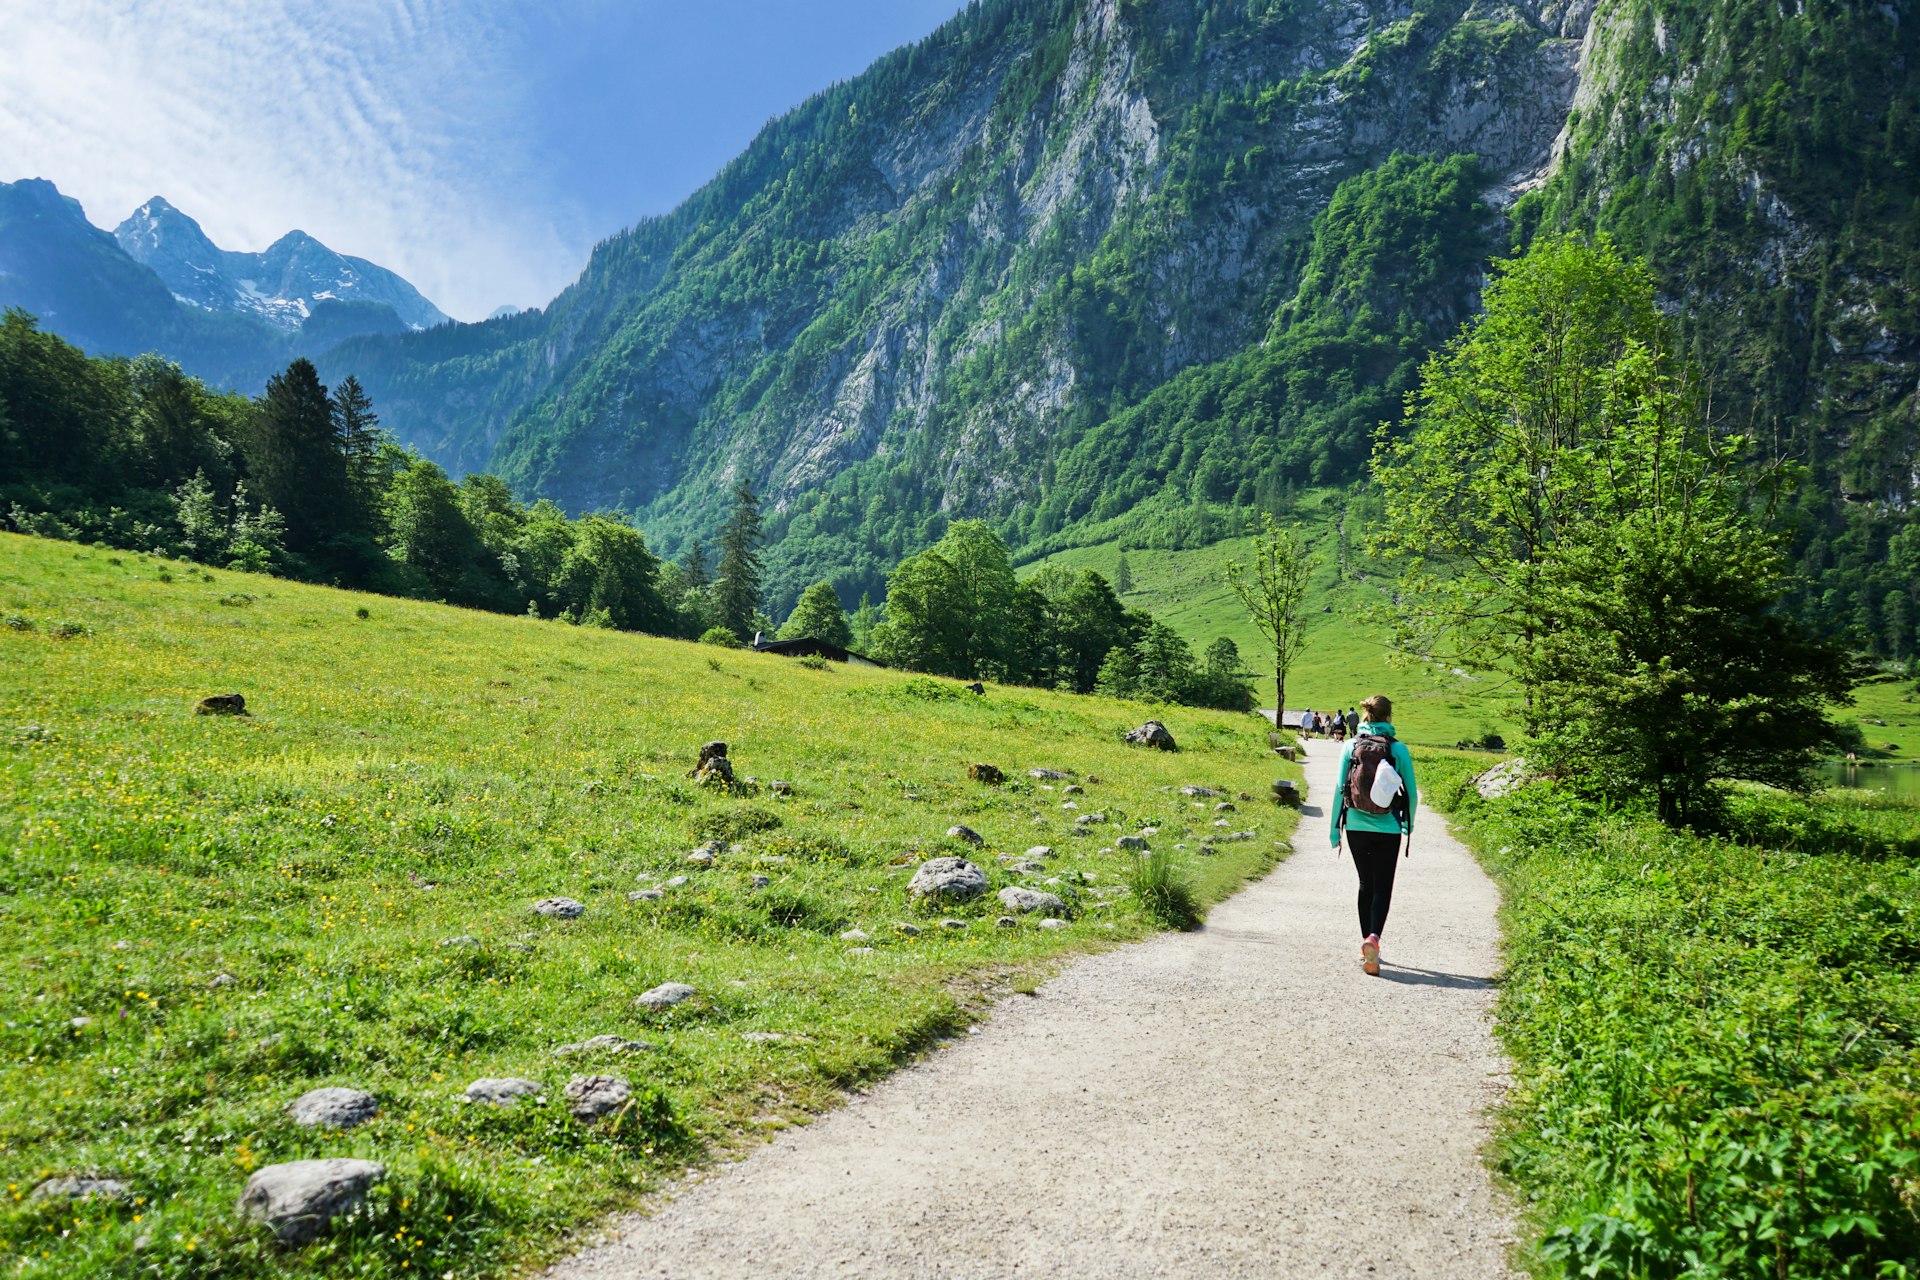 Hikers walking on a trail through a mountainous region of the National park Berchtesgaden, Austria